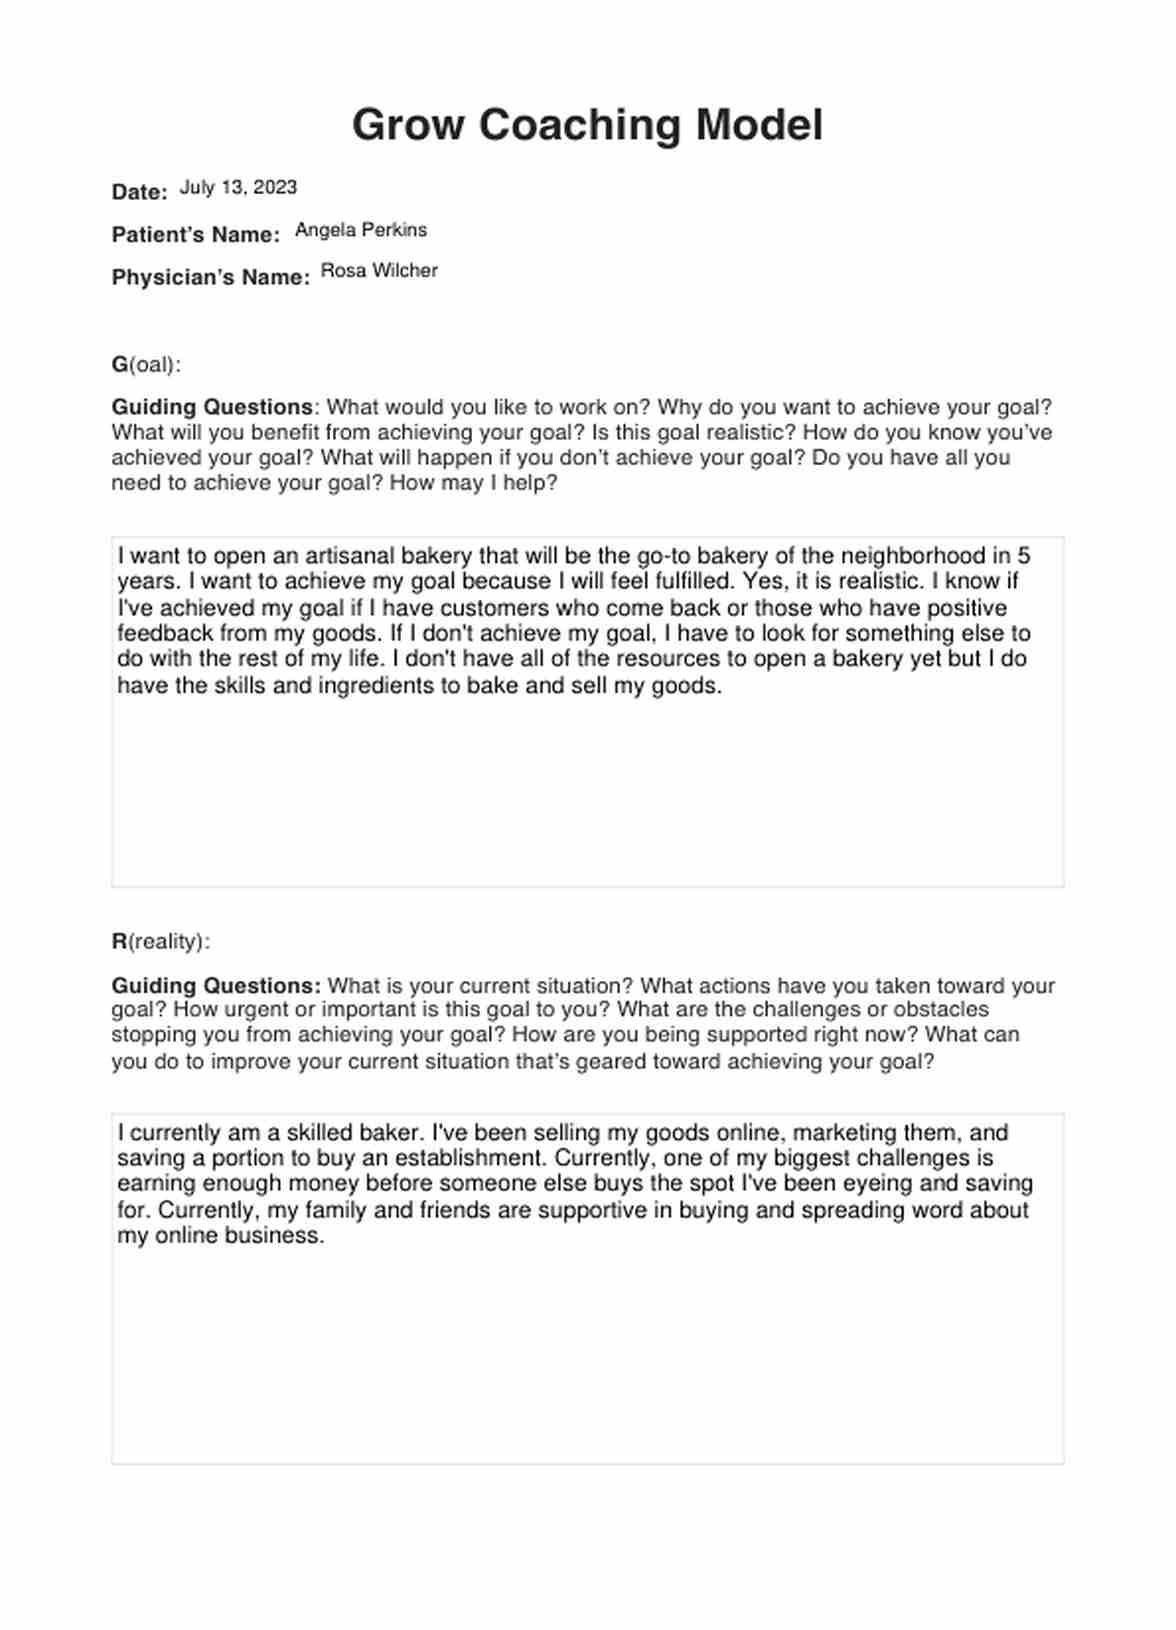 Grow Coaching Model PDF Example